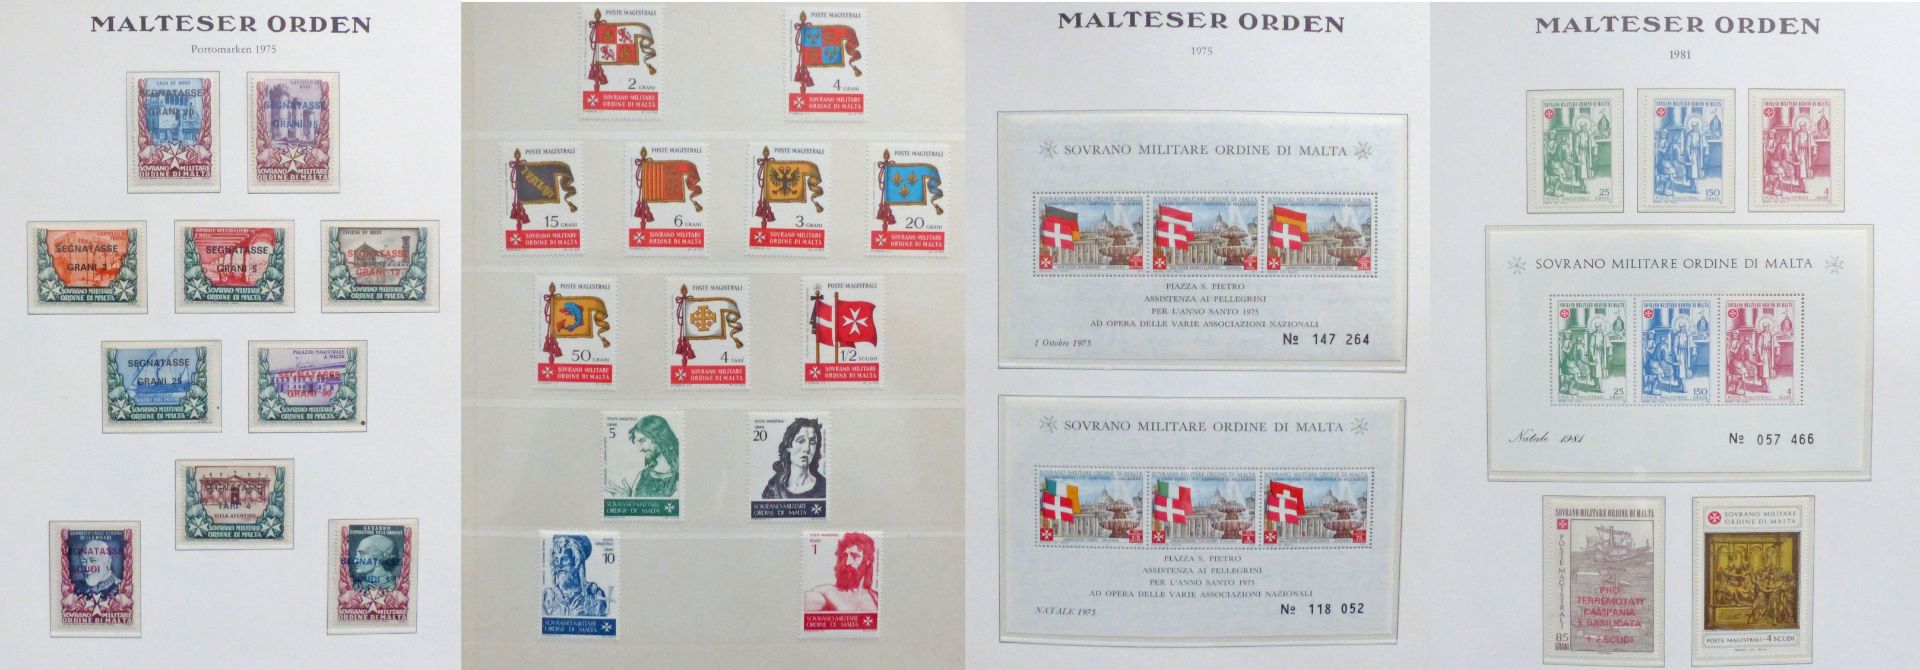 Malta Malteser Ordnen Sovrano Militare Ordine de Malta (S.M.O.M.) Sammlung postfrisch** in zwei